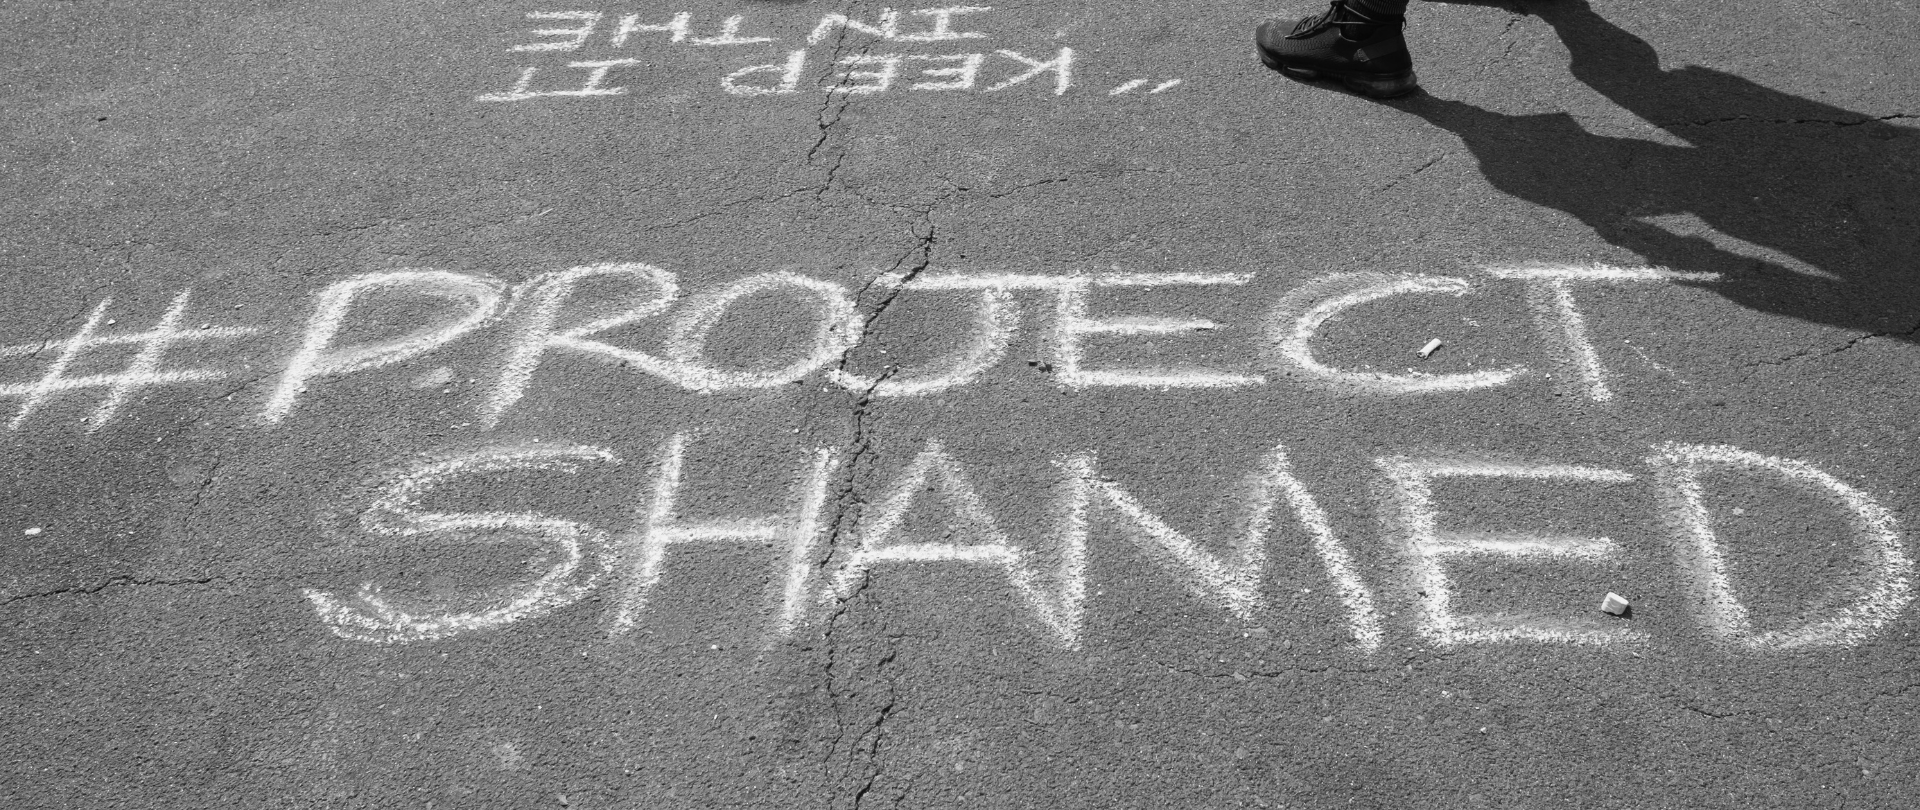 Project Shamed hashtag written on the sidewalk in chalk.